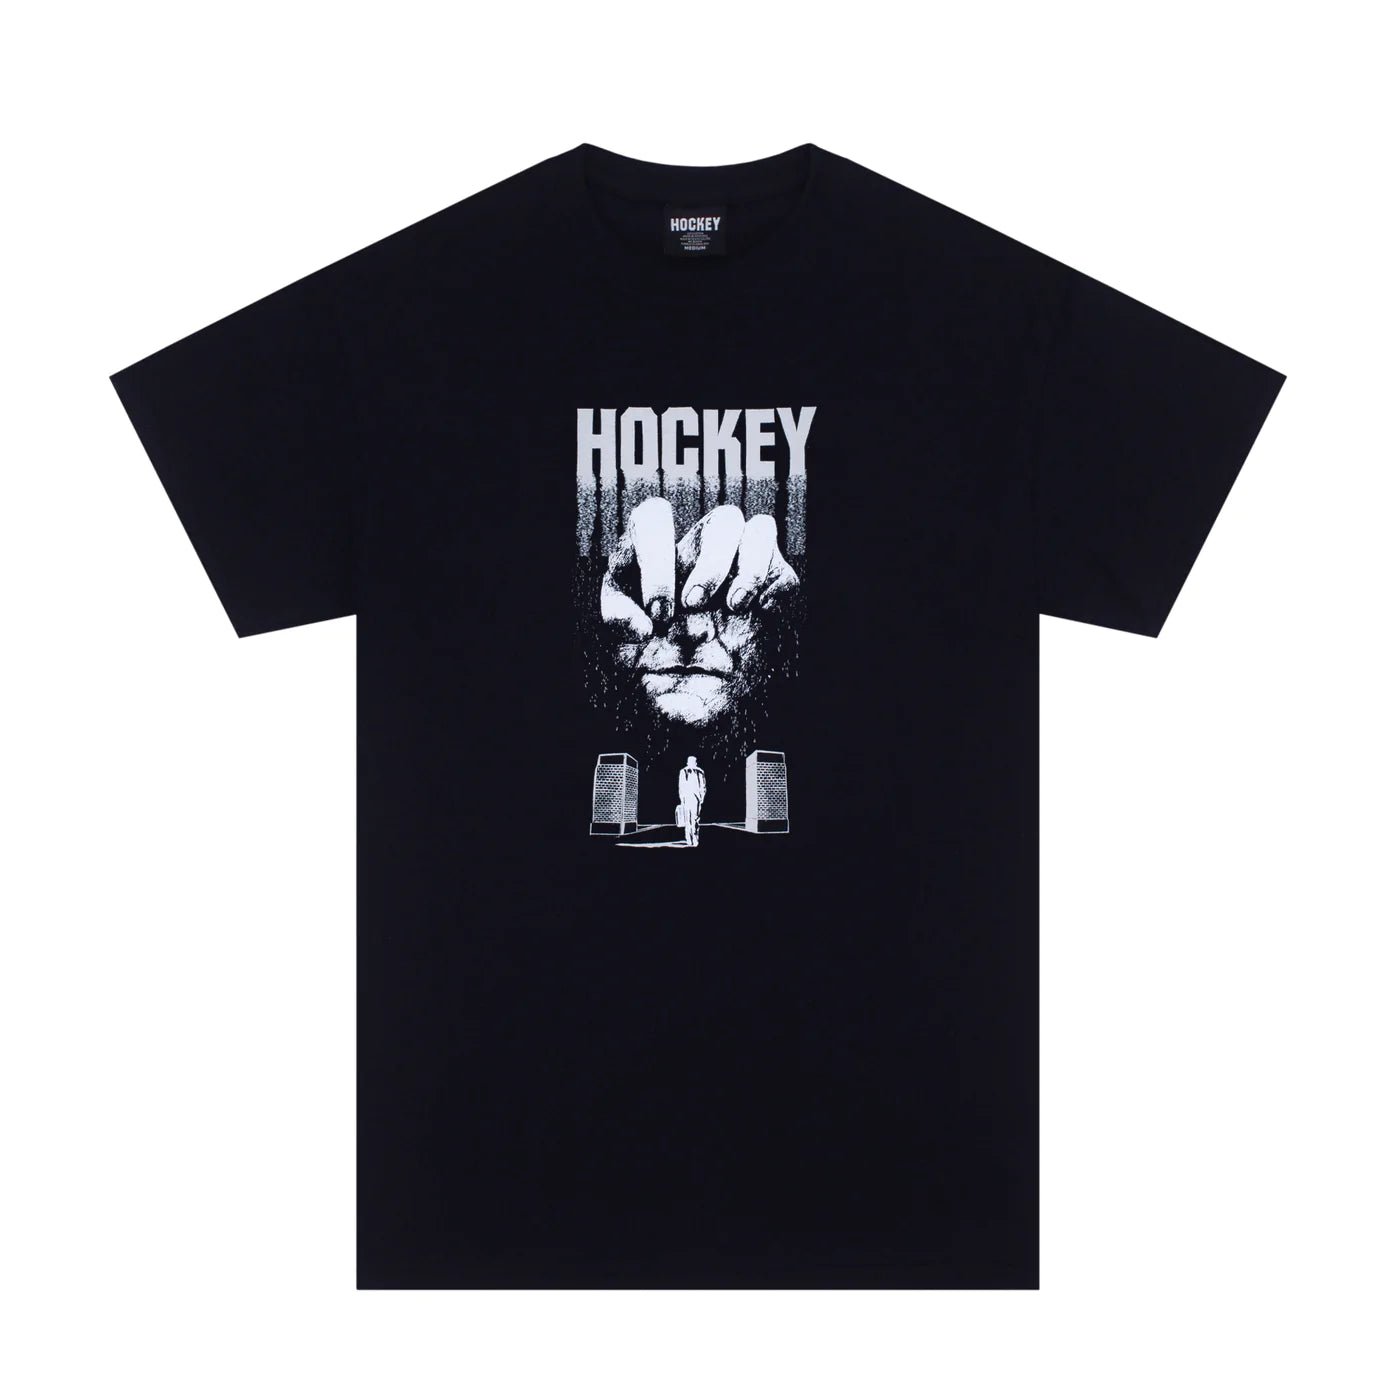 Hockey - Exit Overload T-Shirt (Black) - Parliamentskateshop